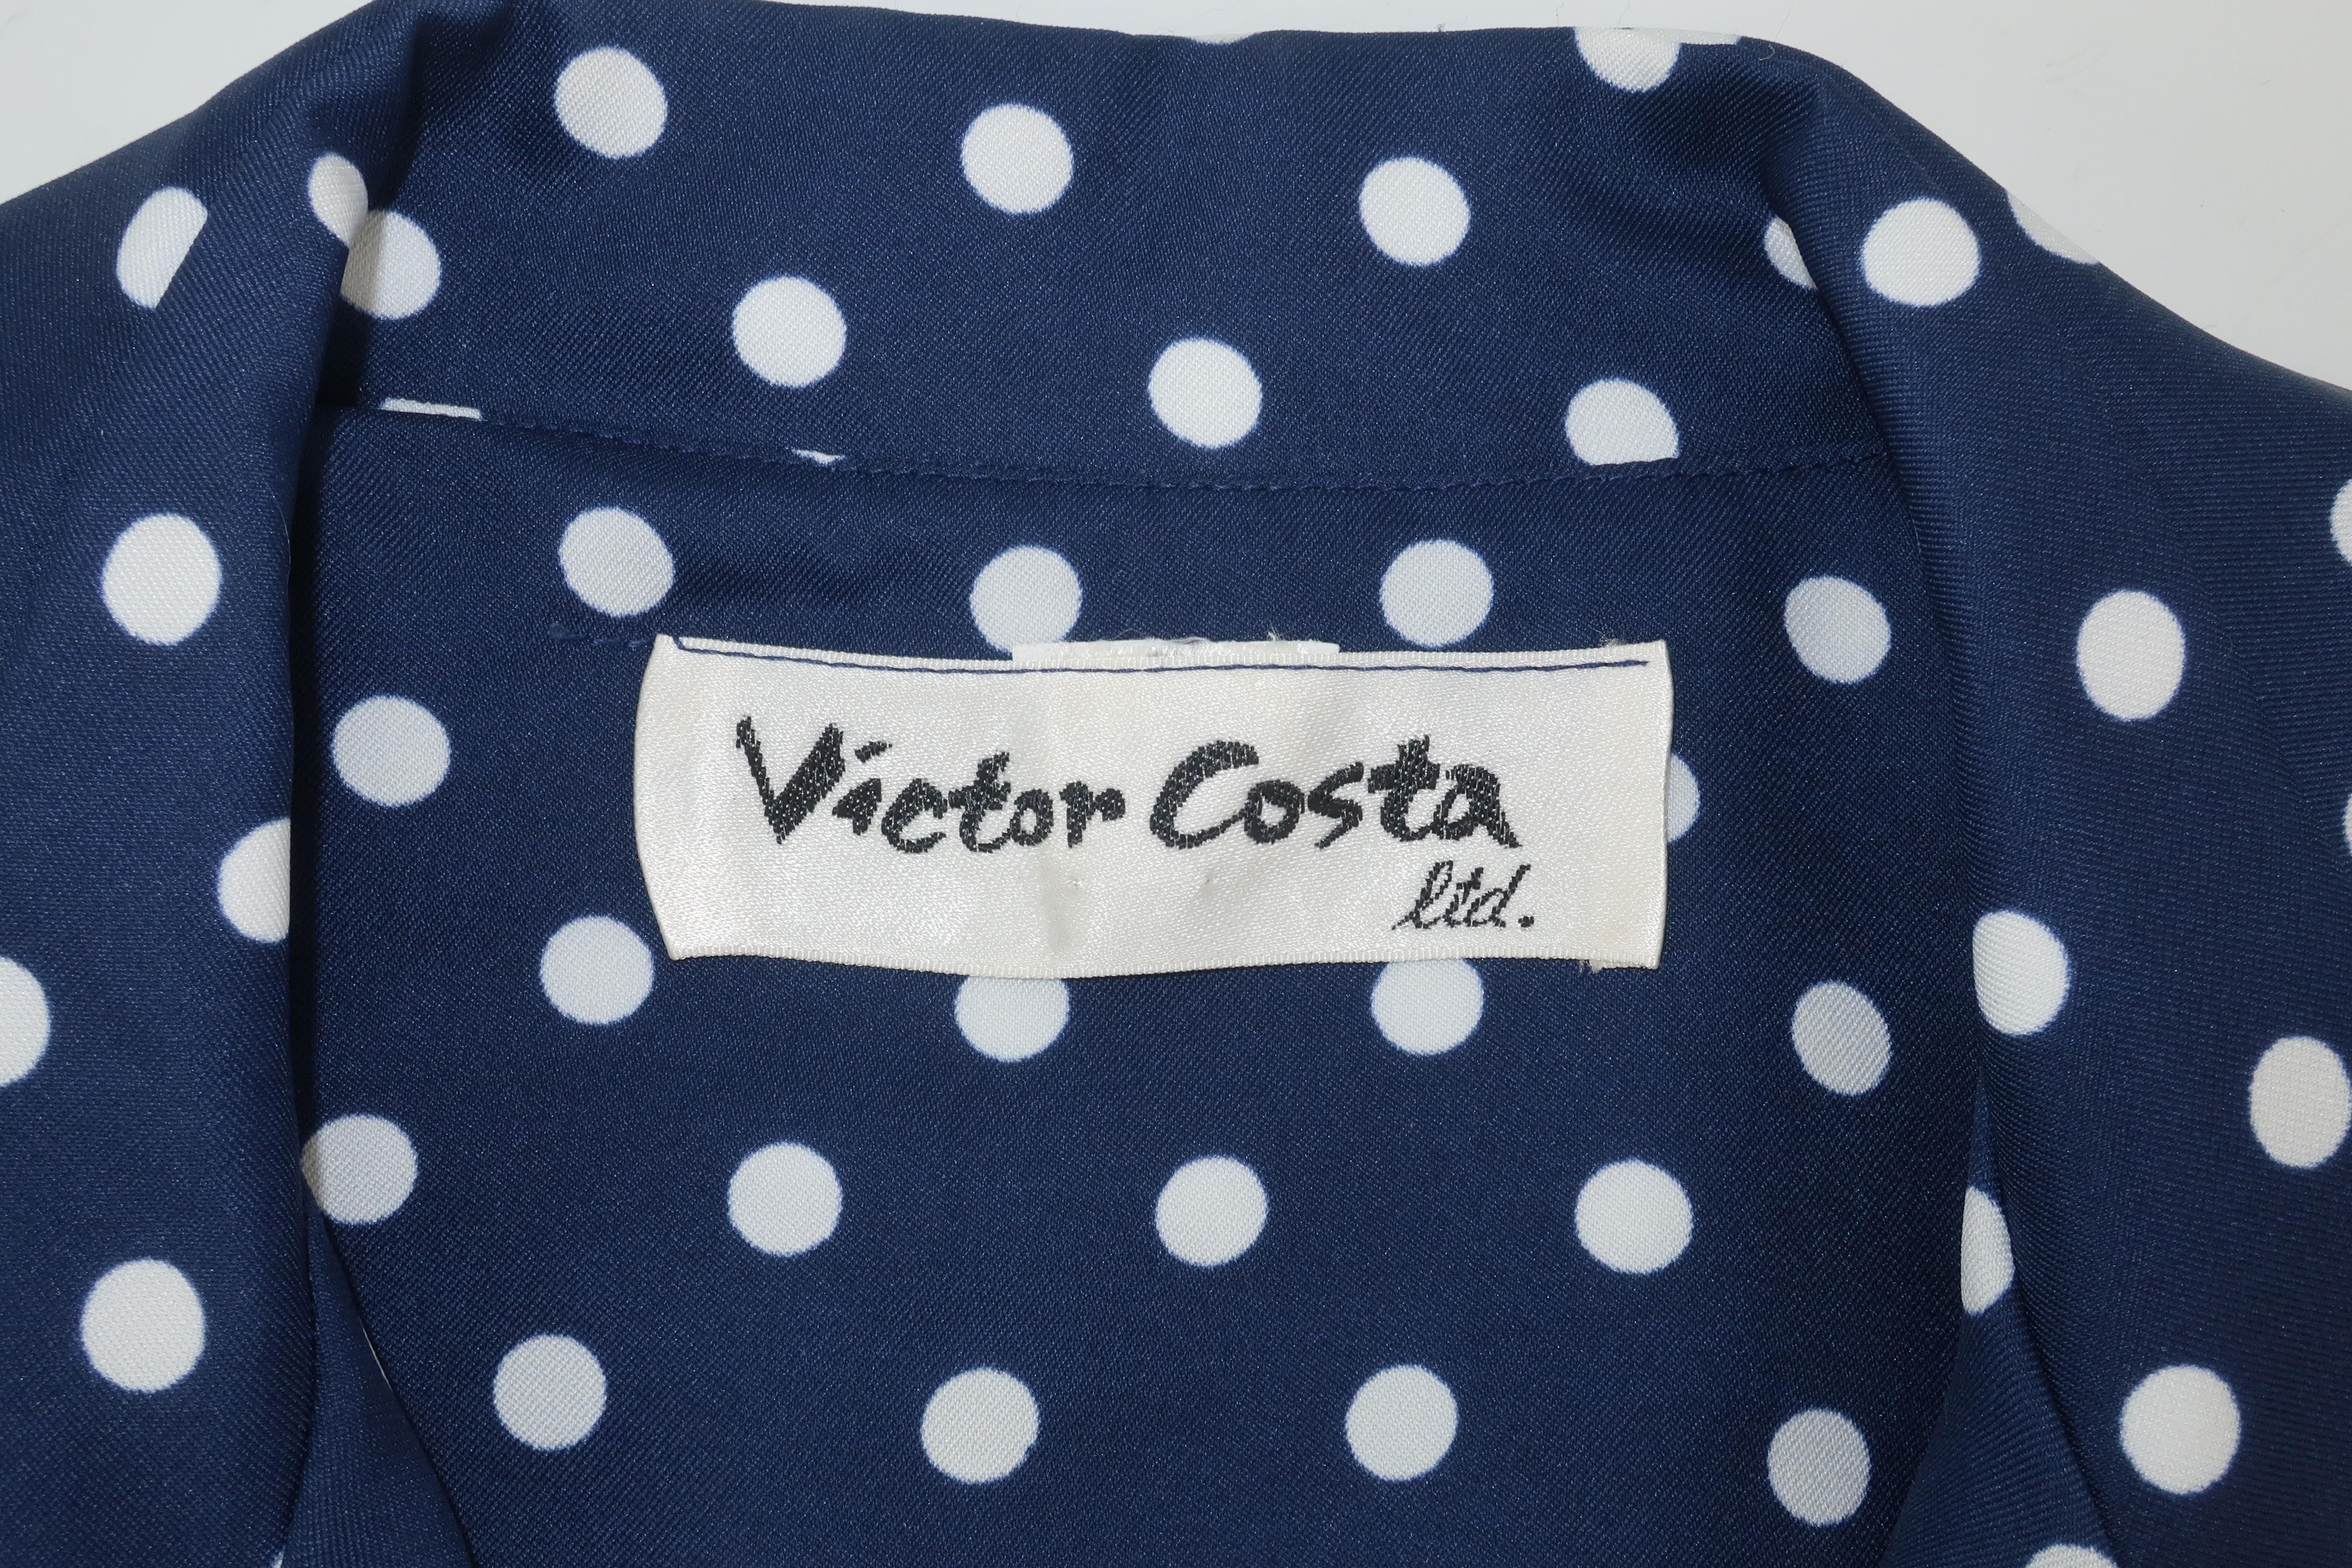 Victor Costa Blue and White Polka Dot Shirt Dress, 1970s  7